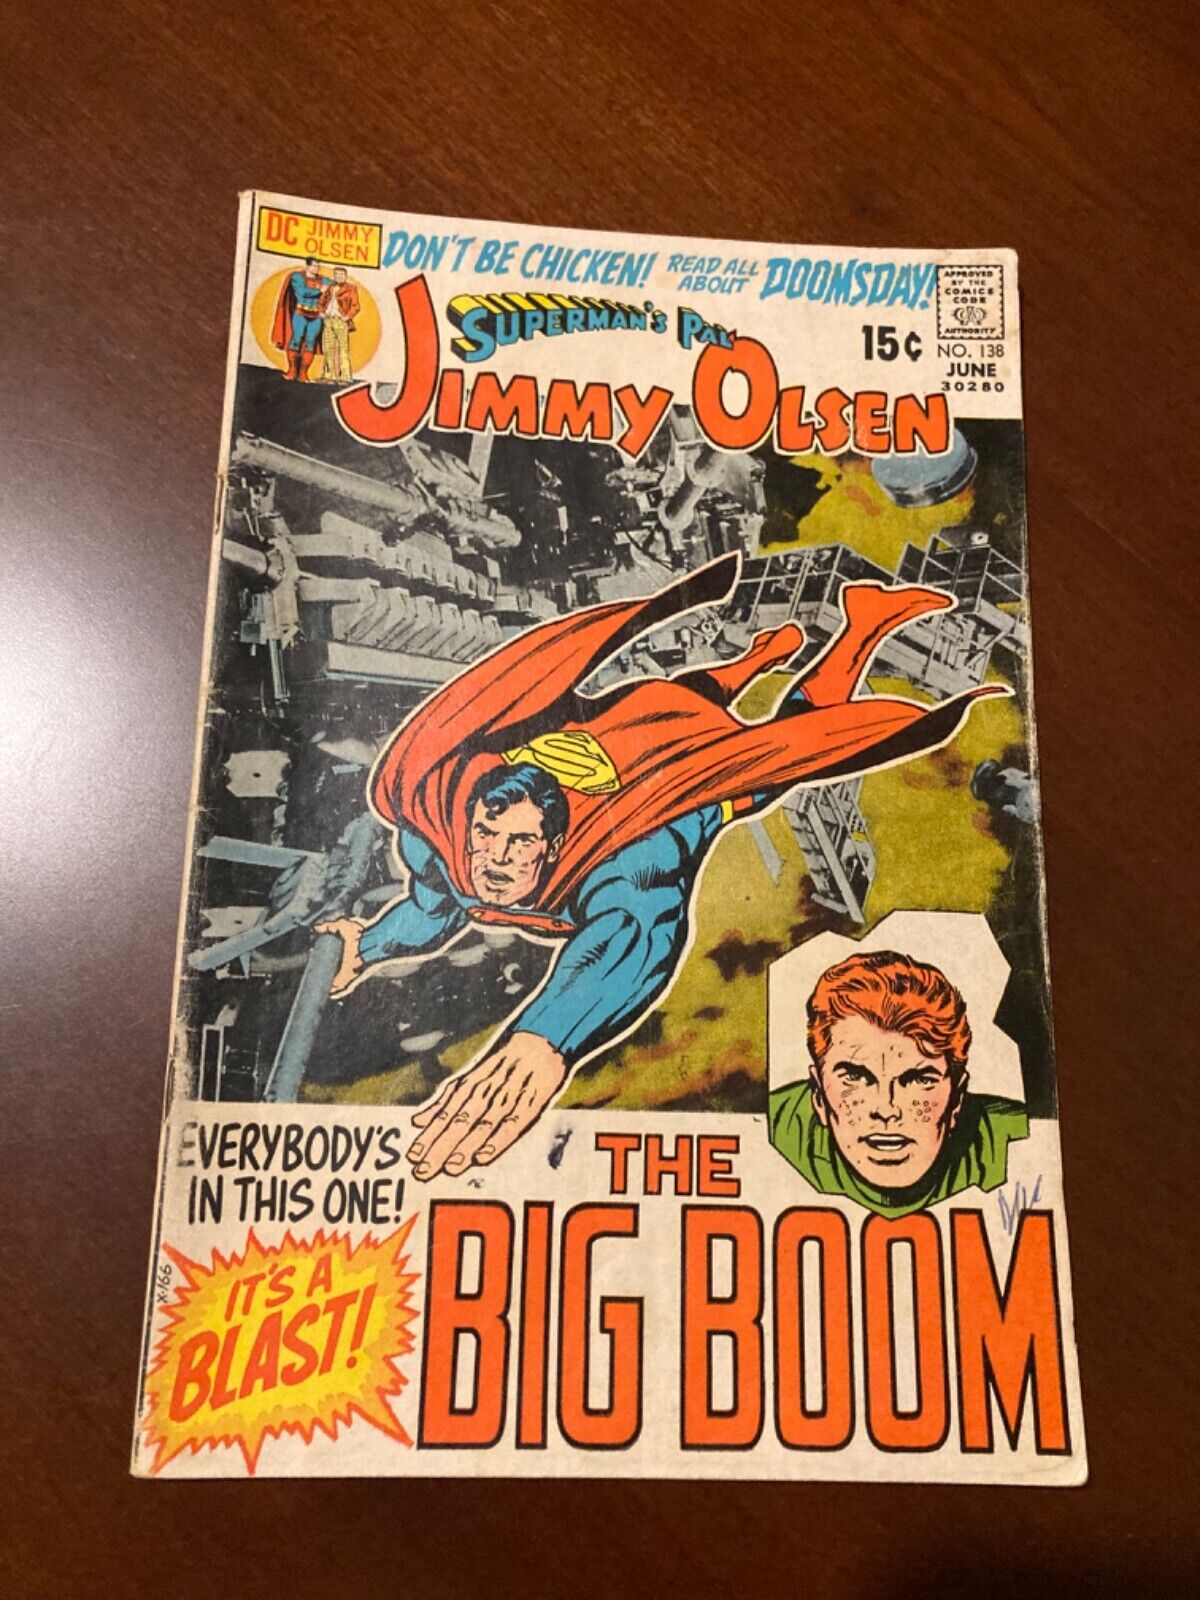 Superman's Pal---Jimmy Olsen (DC) #138, June 1971, $0.15, VG+ (4.5) Comic Book